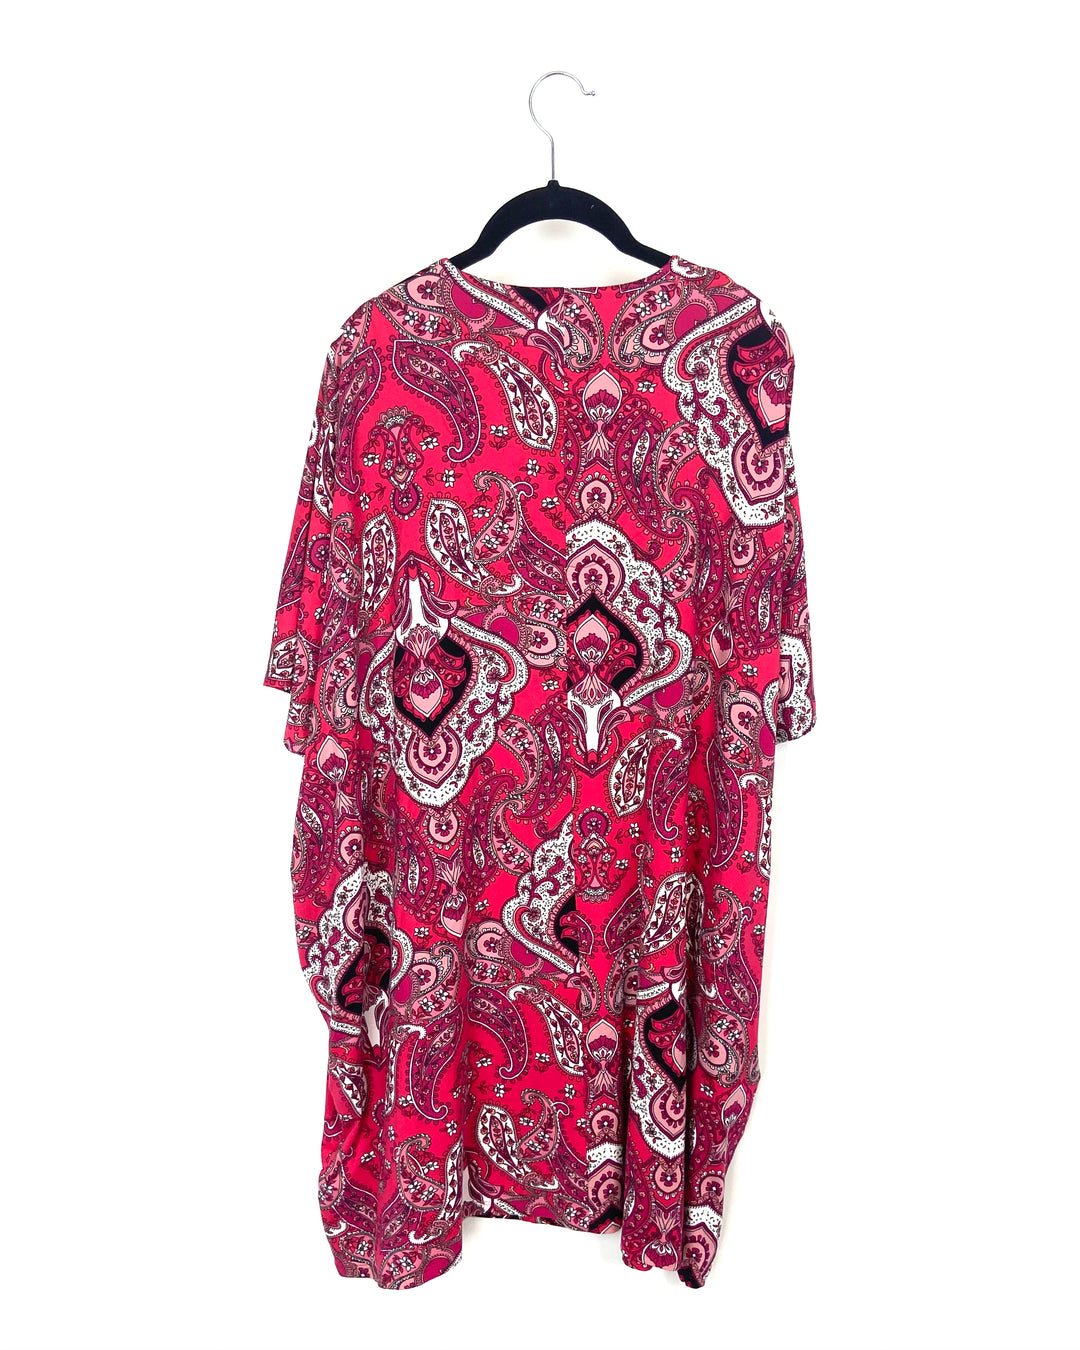 Pink and Black Paisley Print Dress - Small/Medium